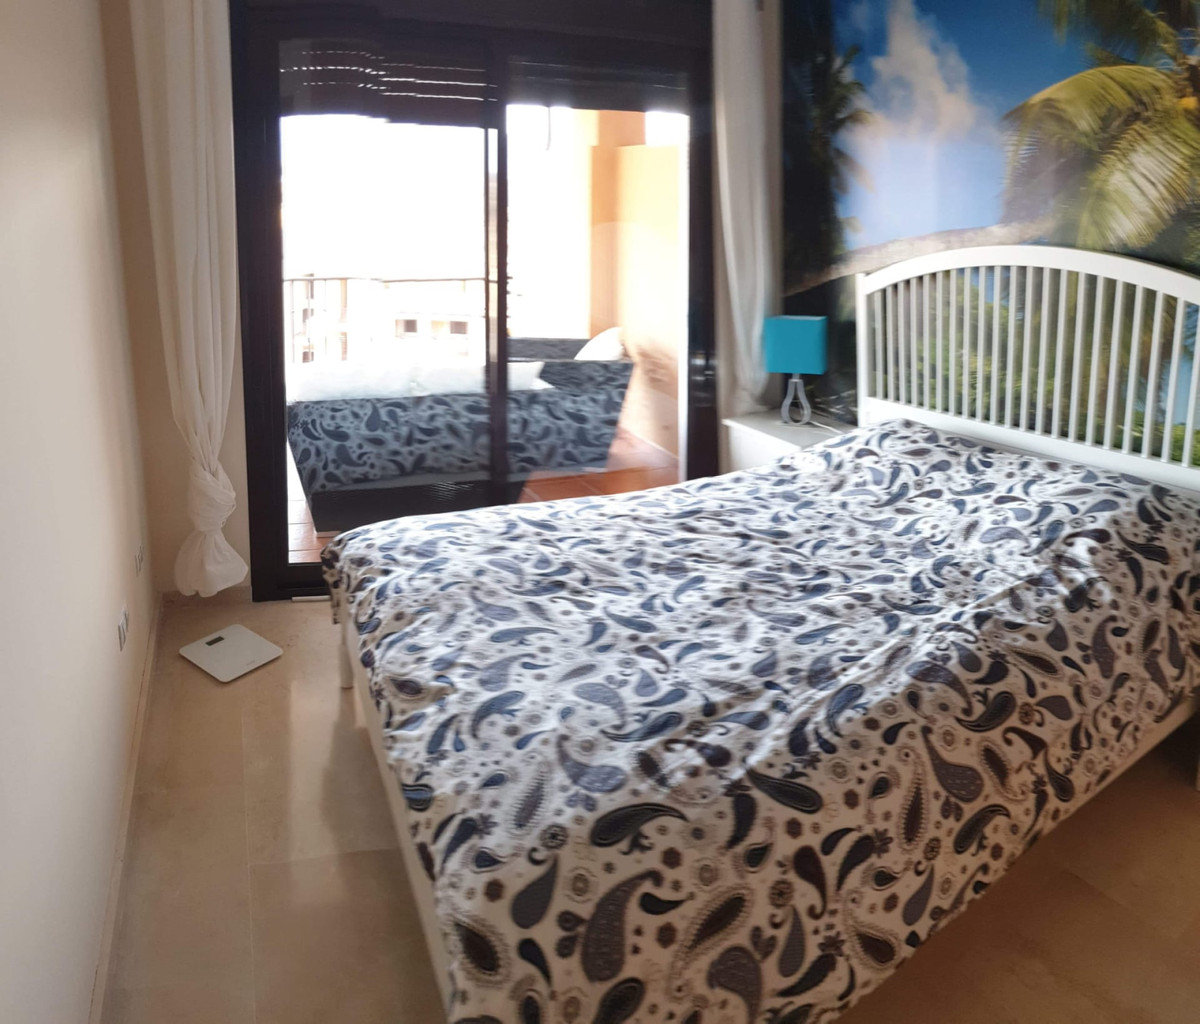 2 bedroom Apartment For Sale in Calanova Golf, Málaga - thumb 34